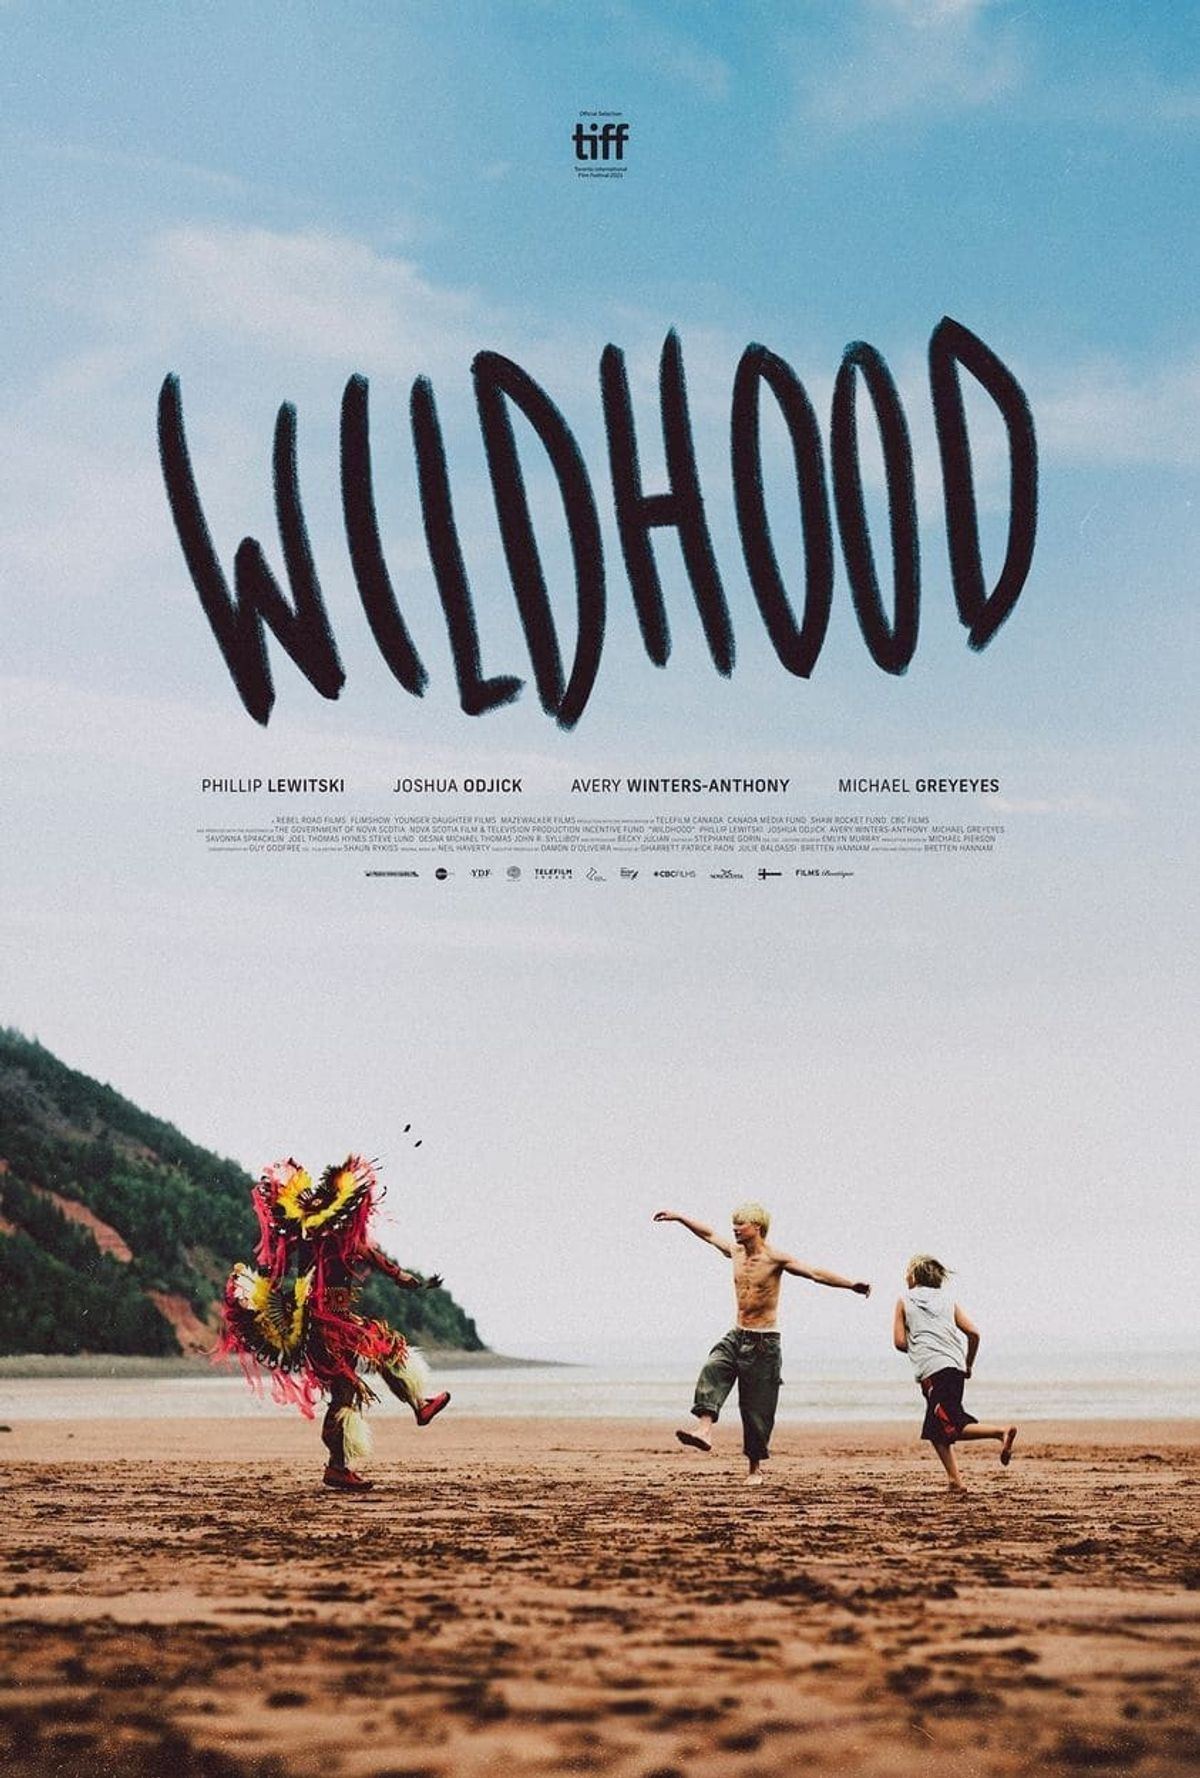 Wildhood (2021) Full Movie Download